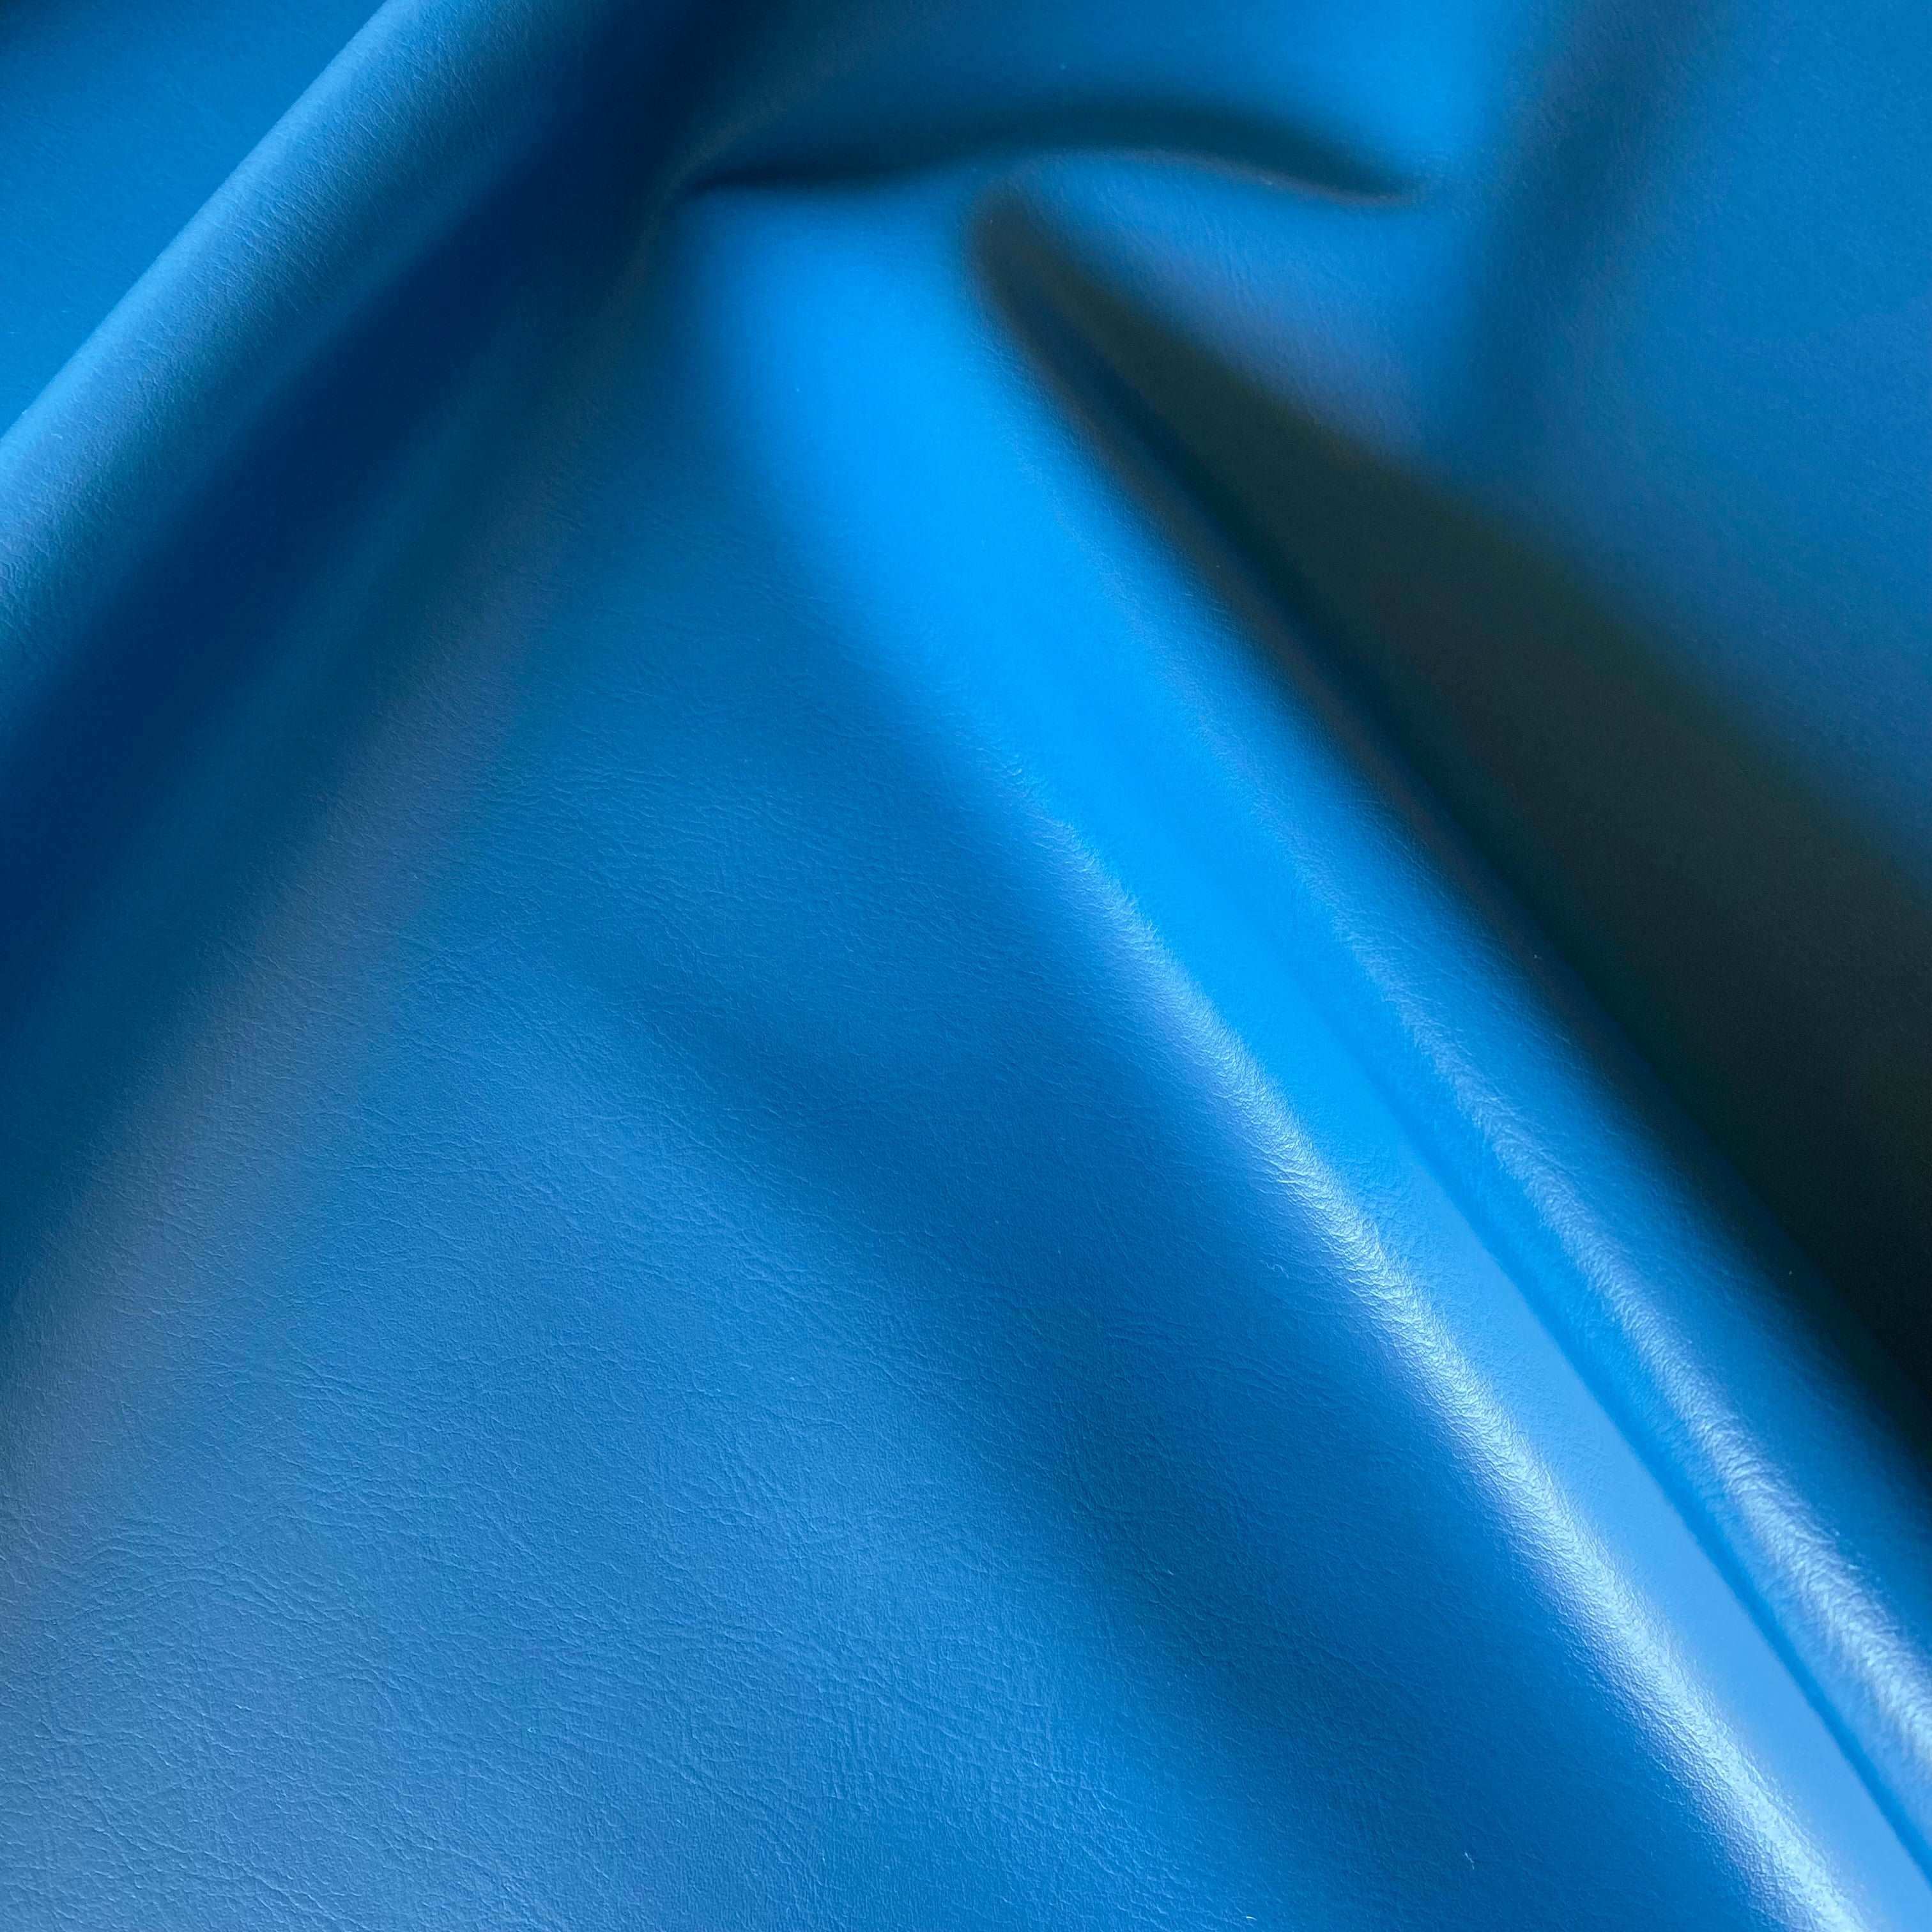 Upholstery vinyl Moroccan blue